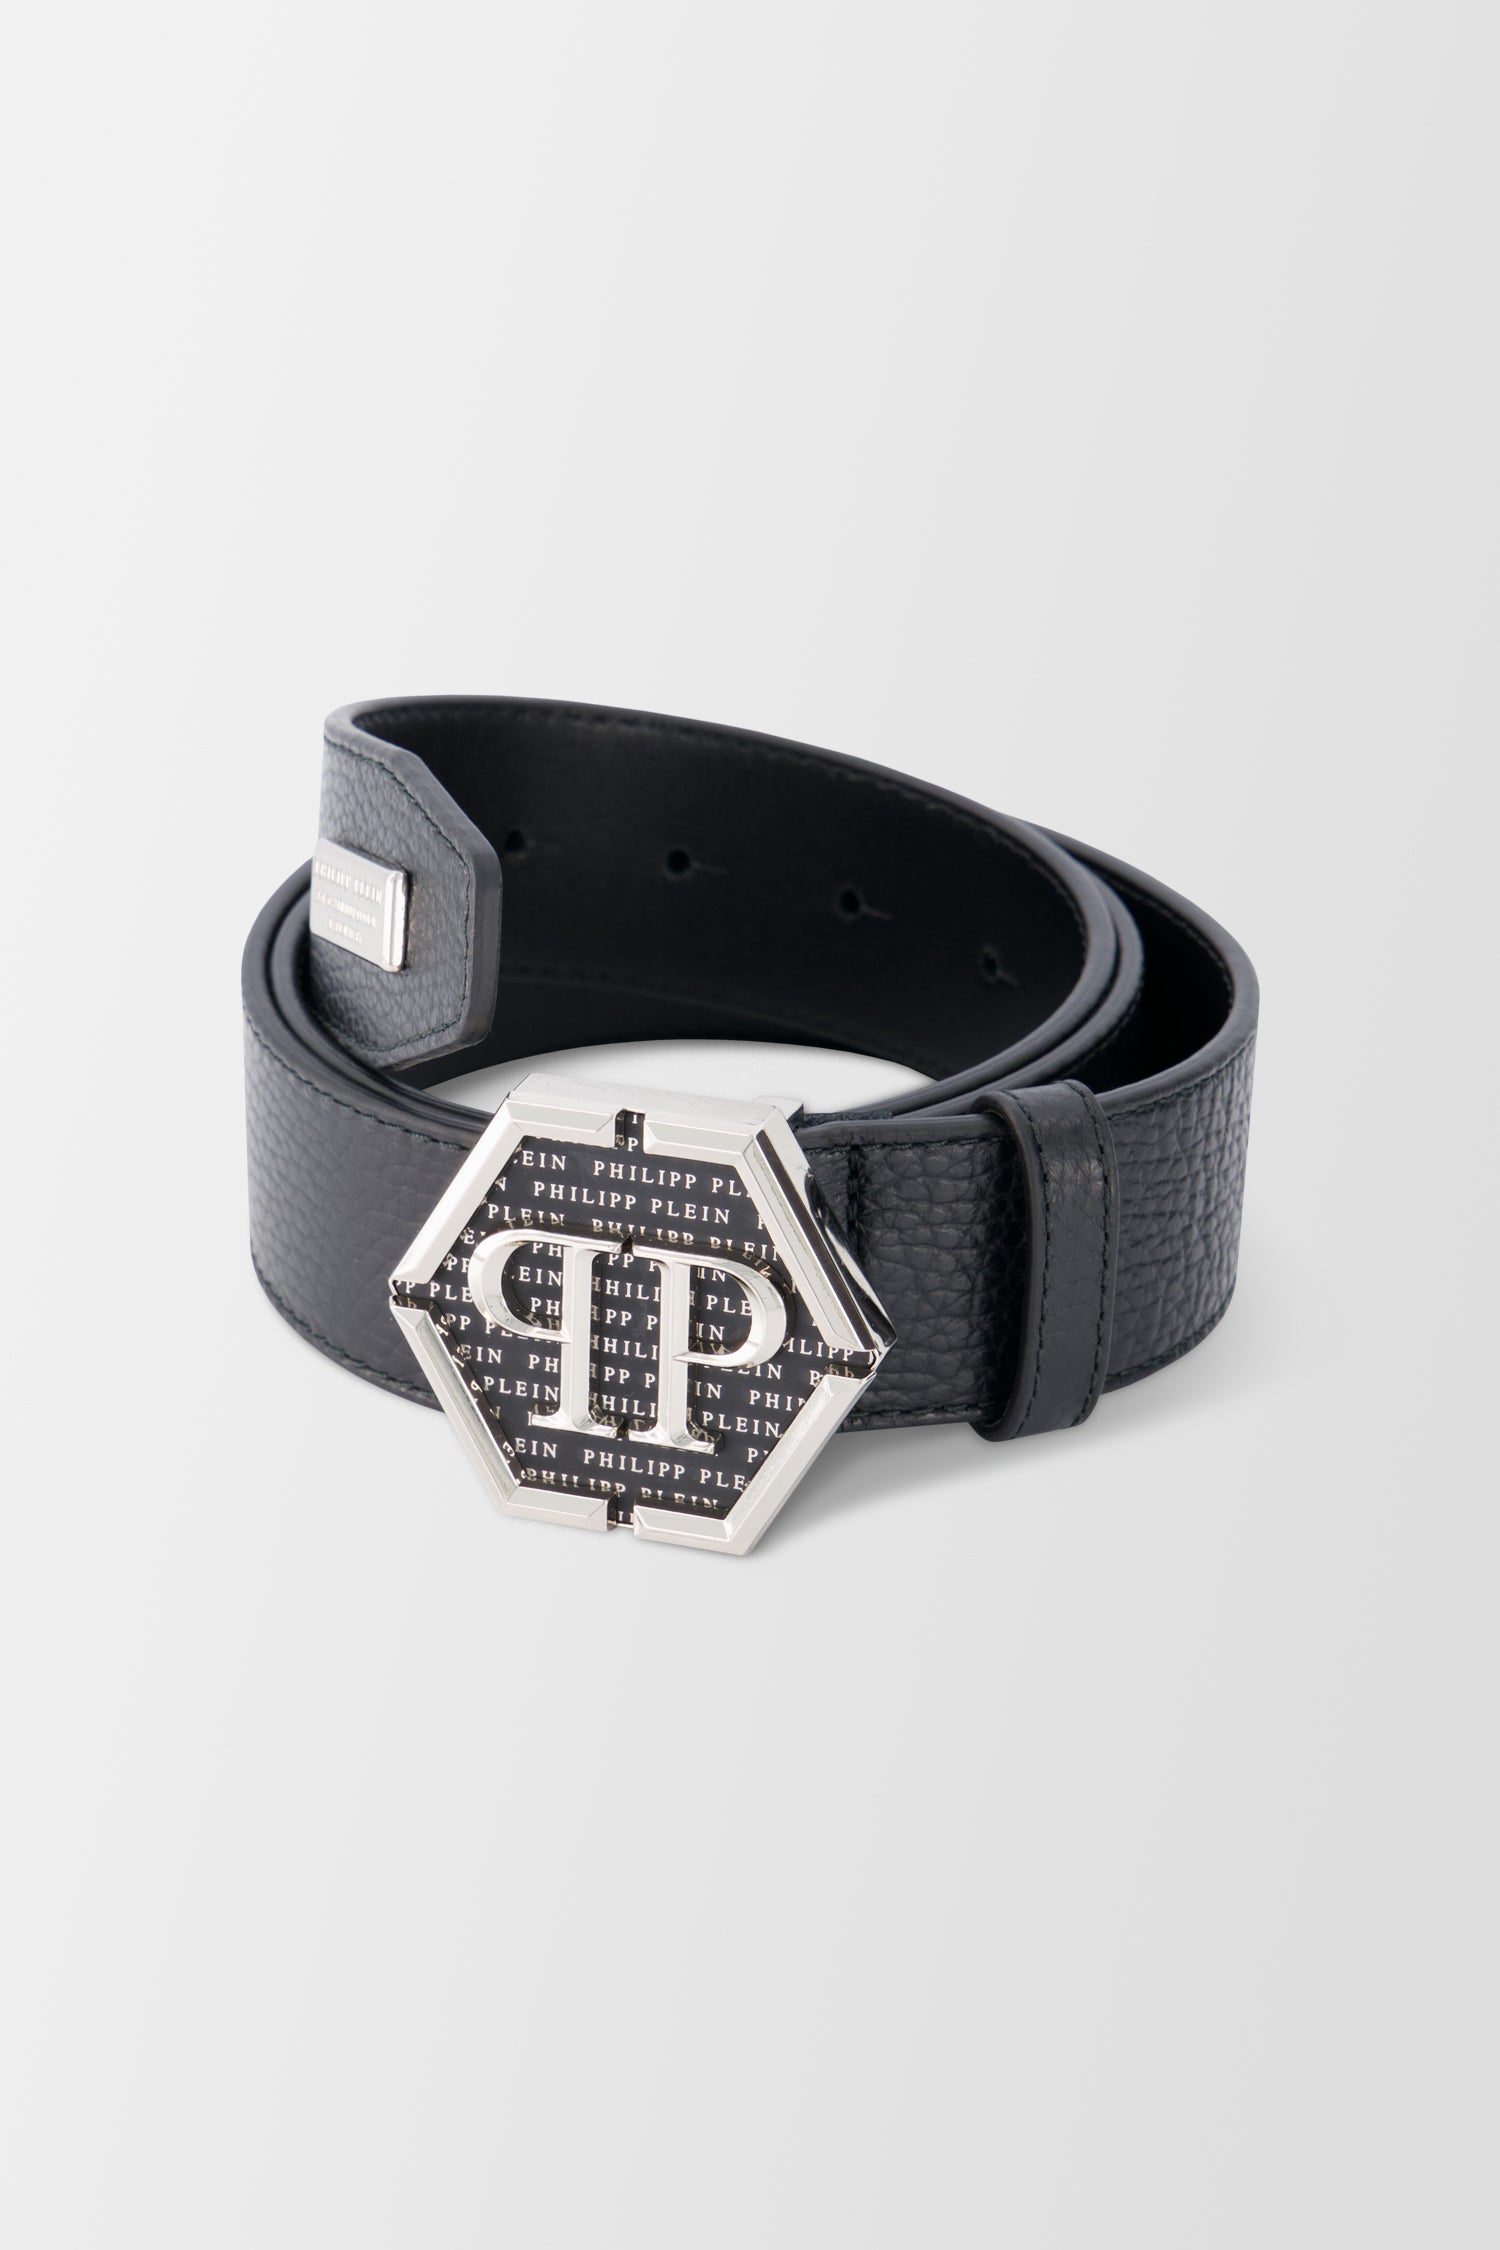 Philipp Plein Black Leather Hexagon Belt